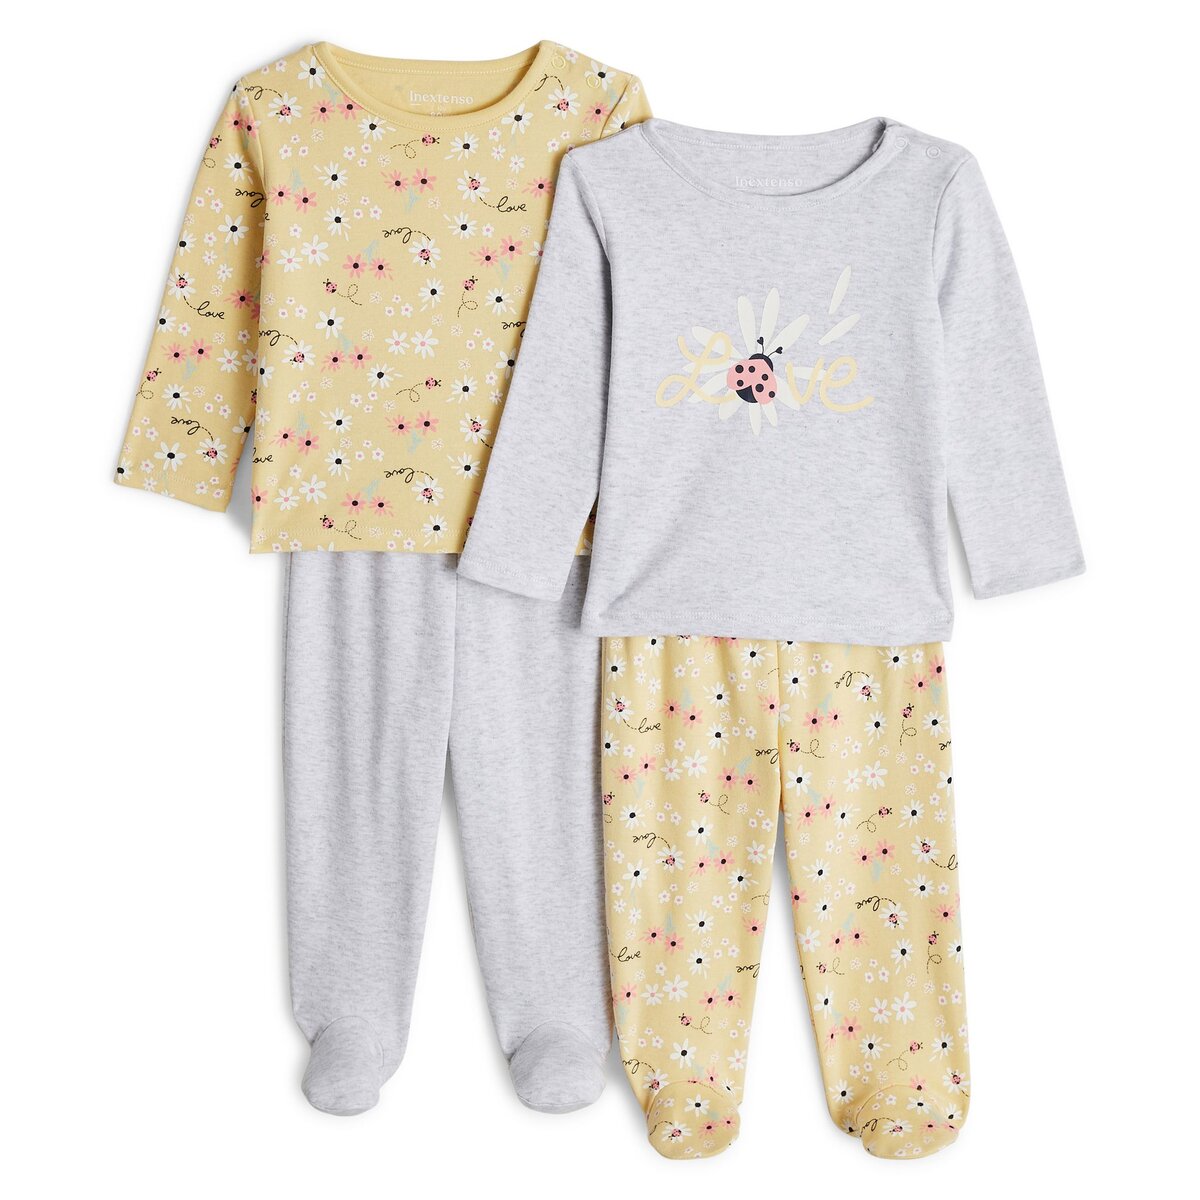 INEXTENSO Lot de 2 pyjamas bébé fille